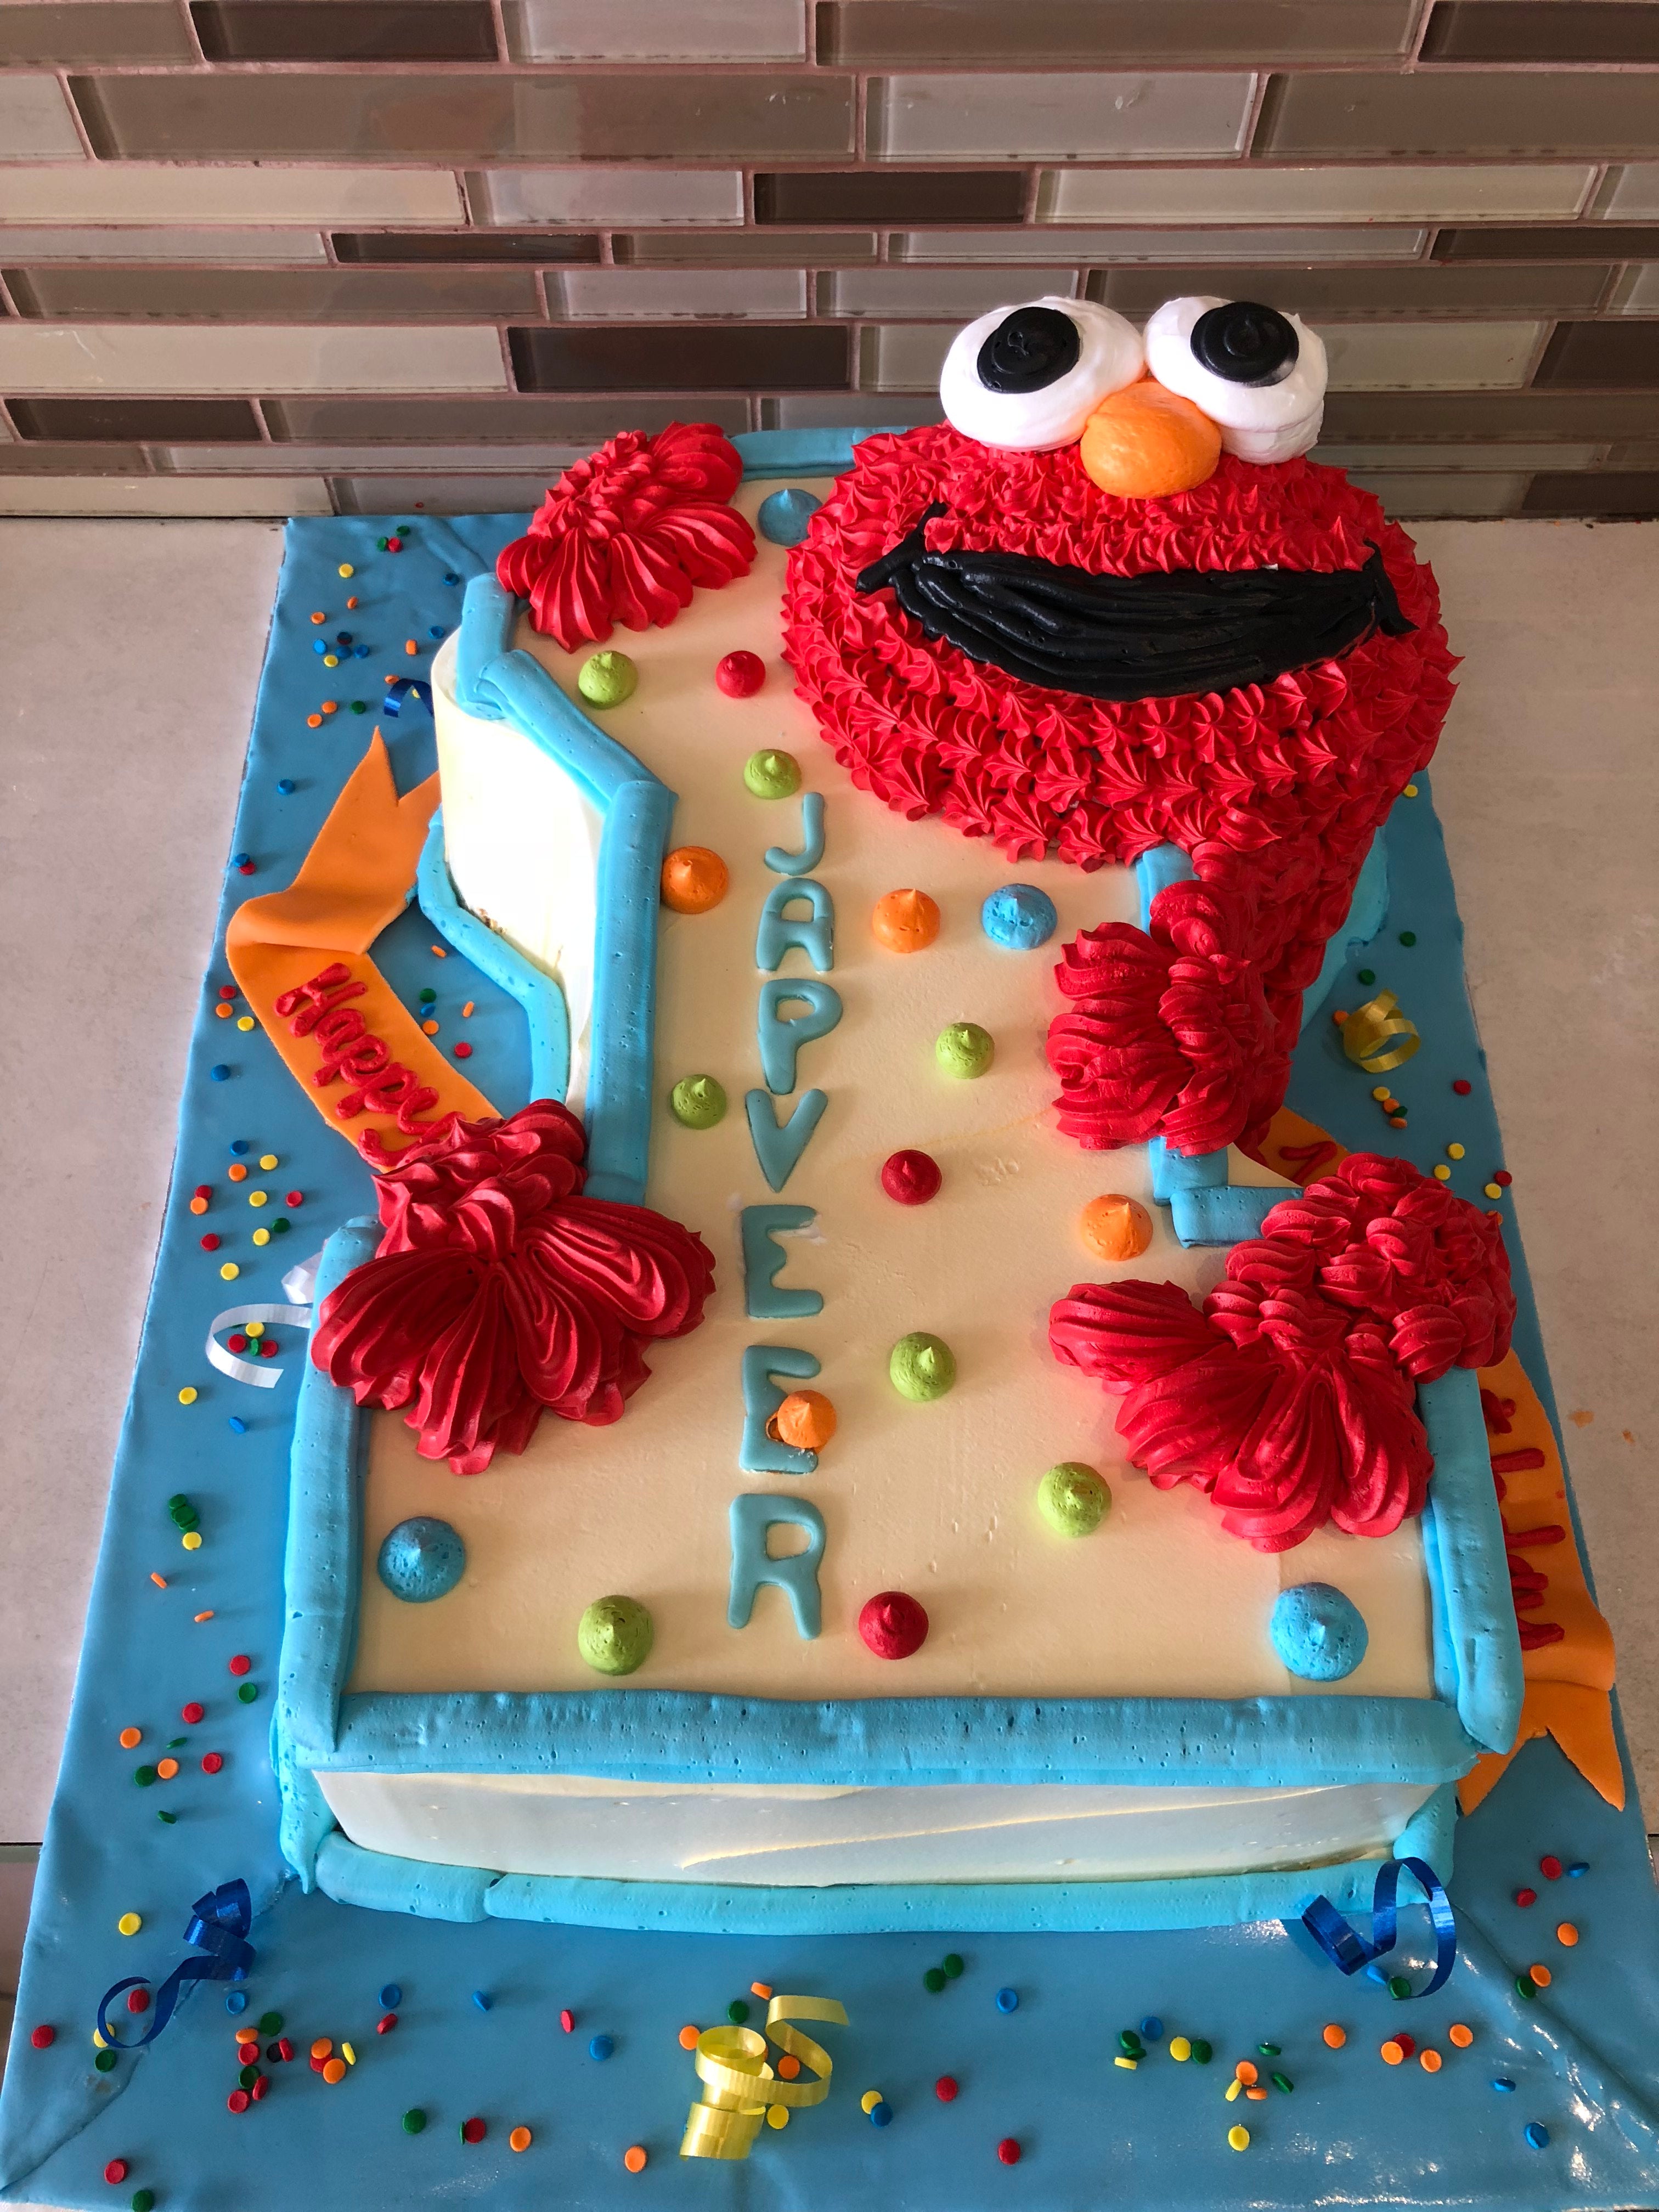 How To Make An Easy Elmo Birthday Cake (for Cheap!) - A DIY Tutorial